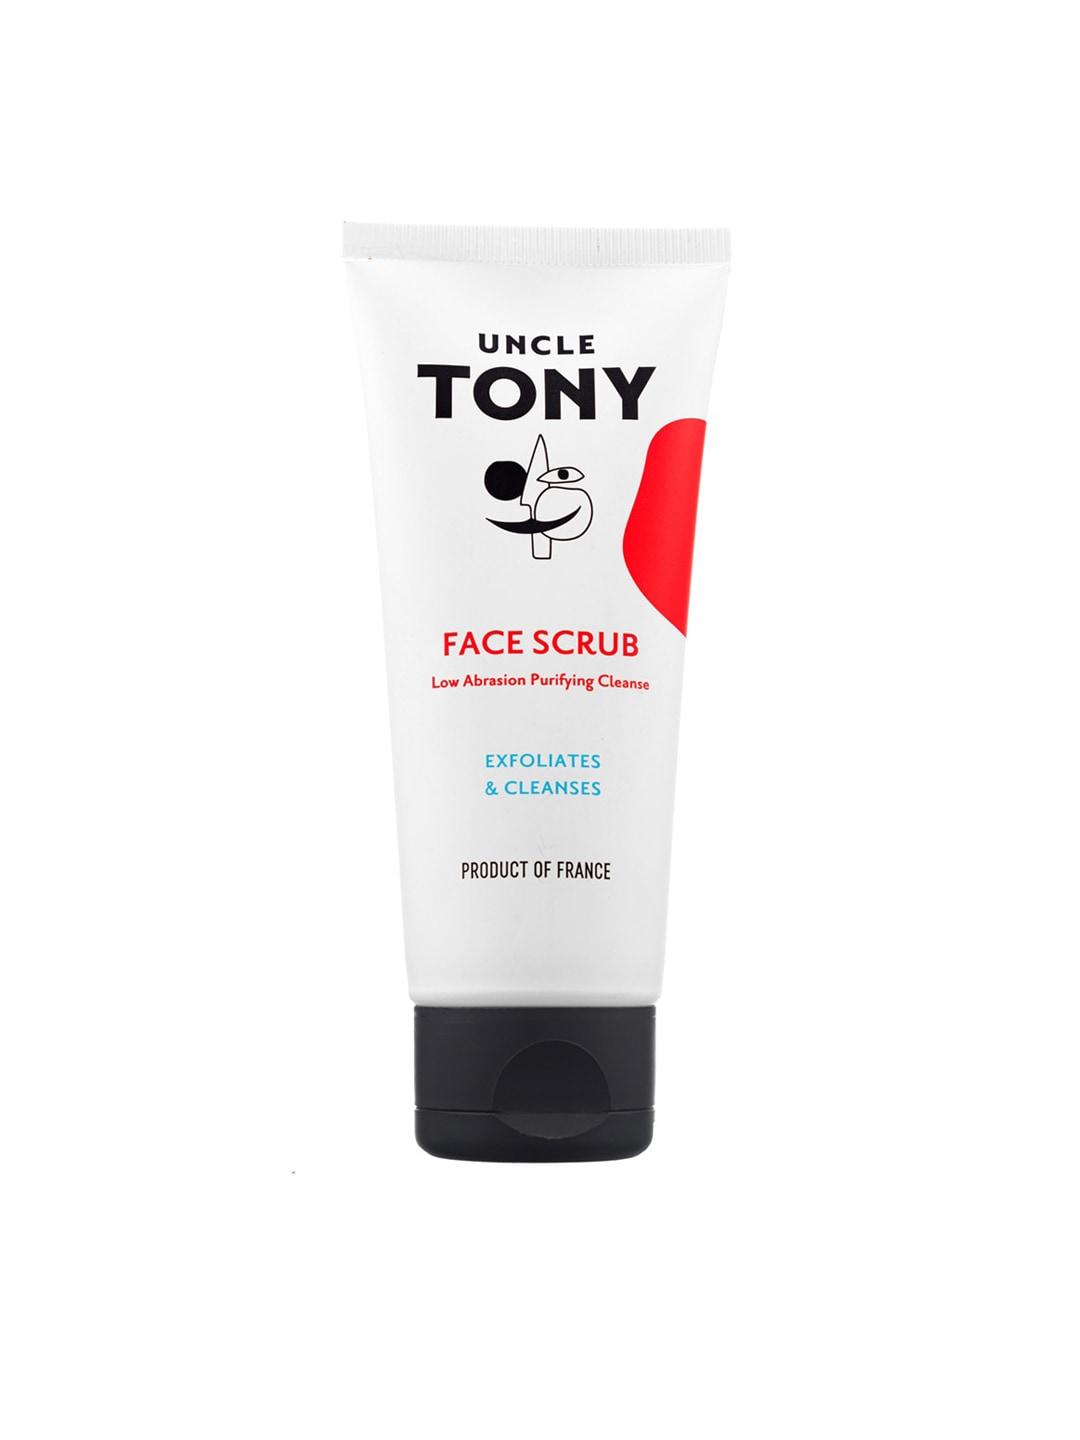 UNCLE TONY Exfoliates & Cleanses Face Scrub